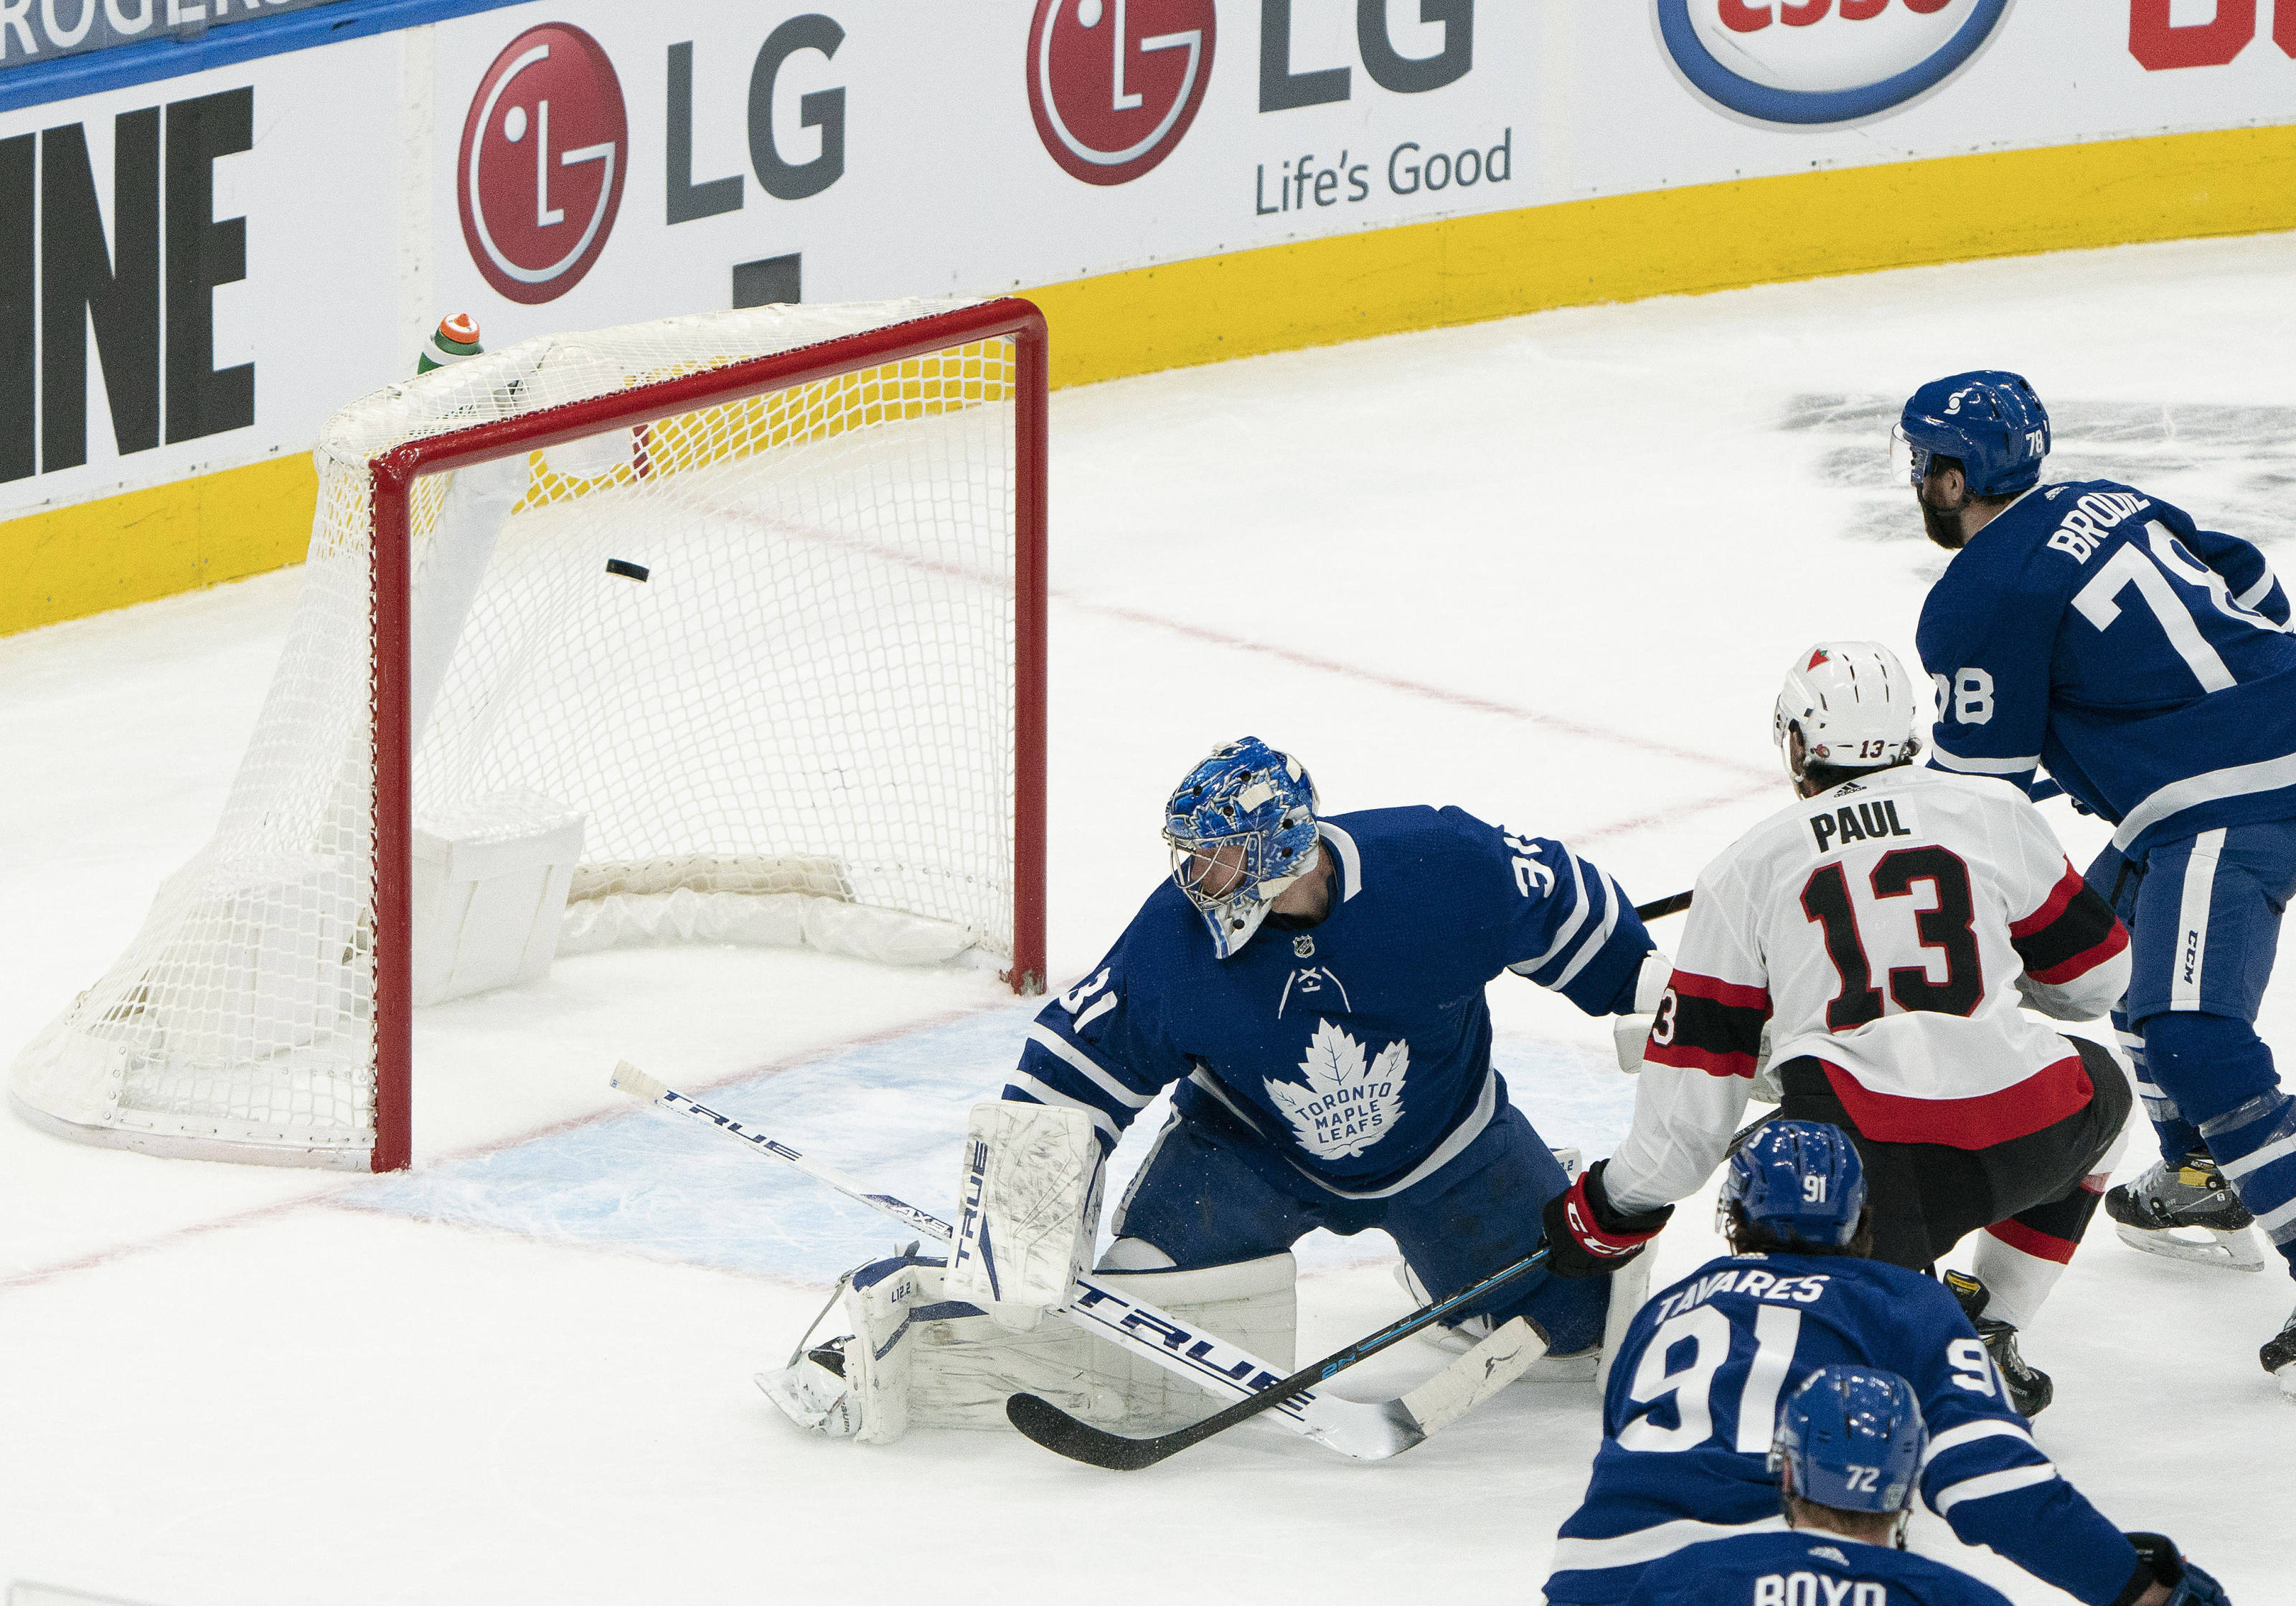 Frederik Andersen to start in net for Leafs against Senators on Wednesday